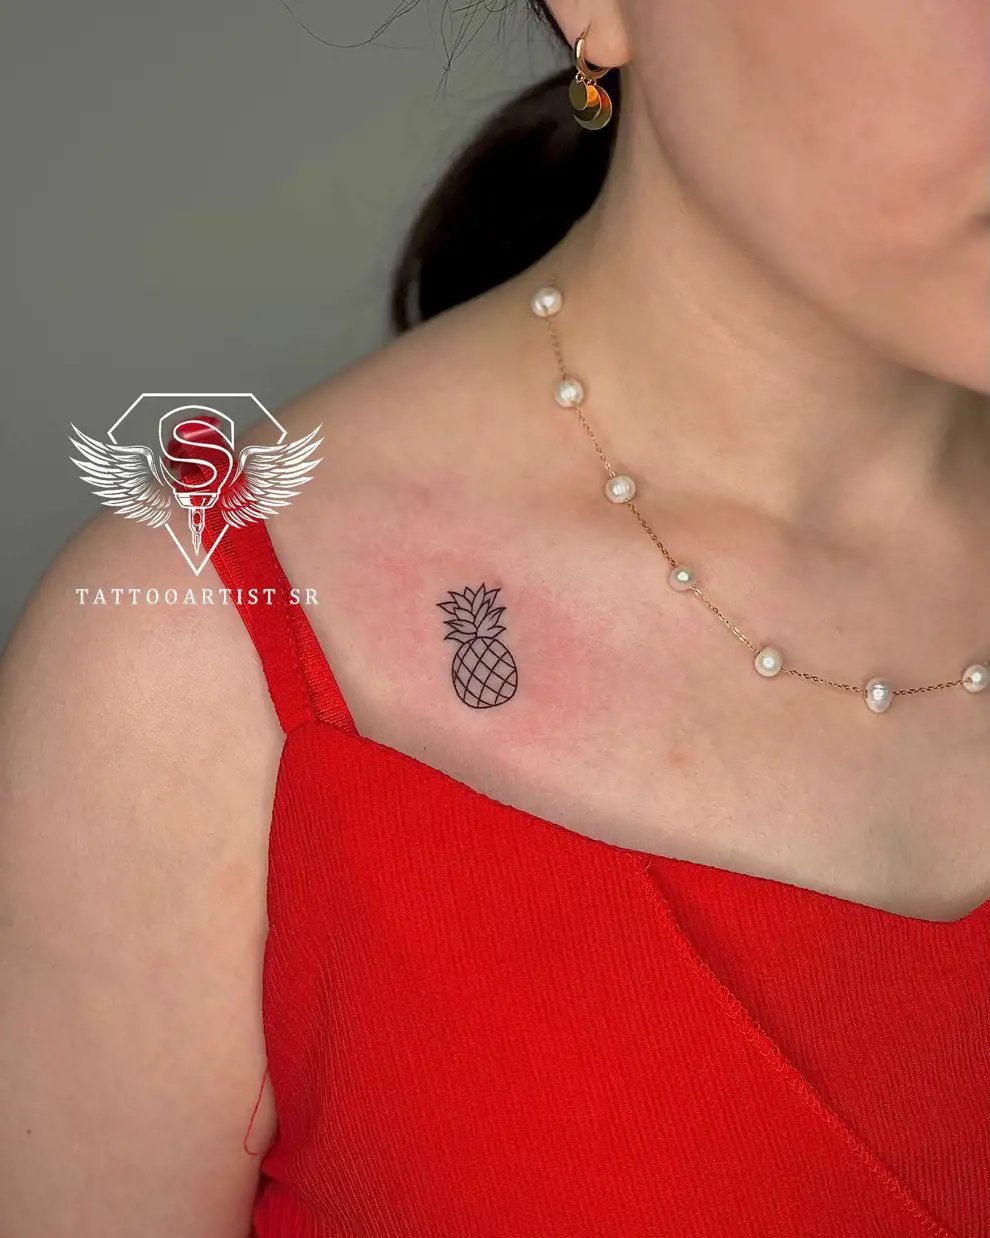 Tatuajes con significado: piña